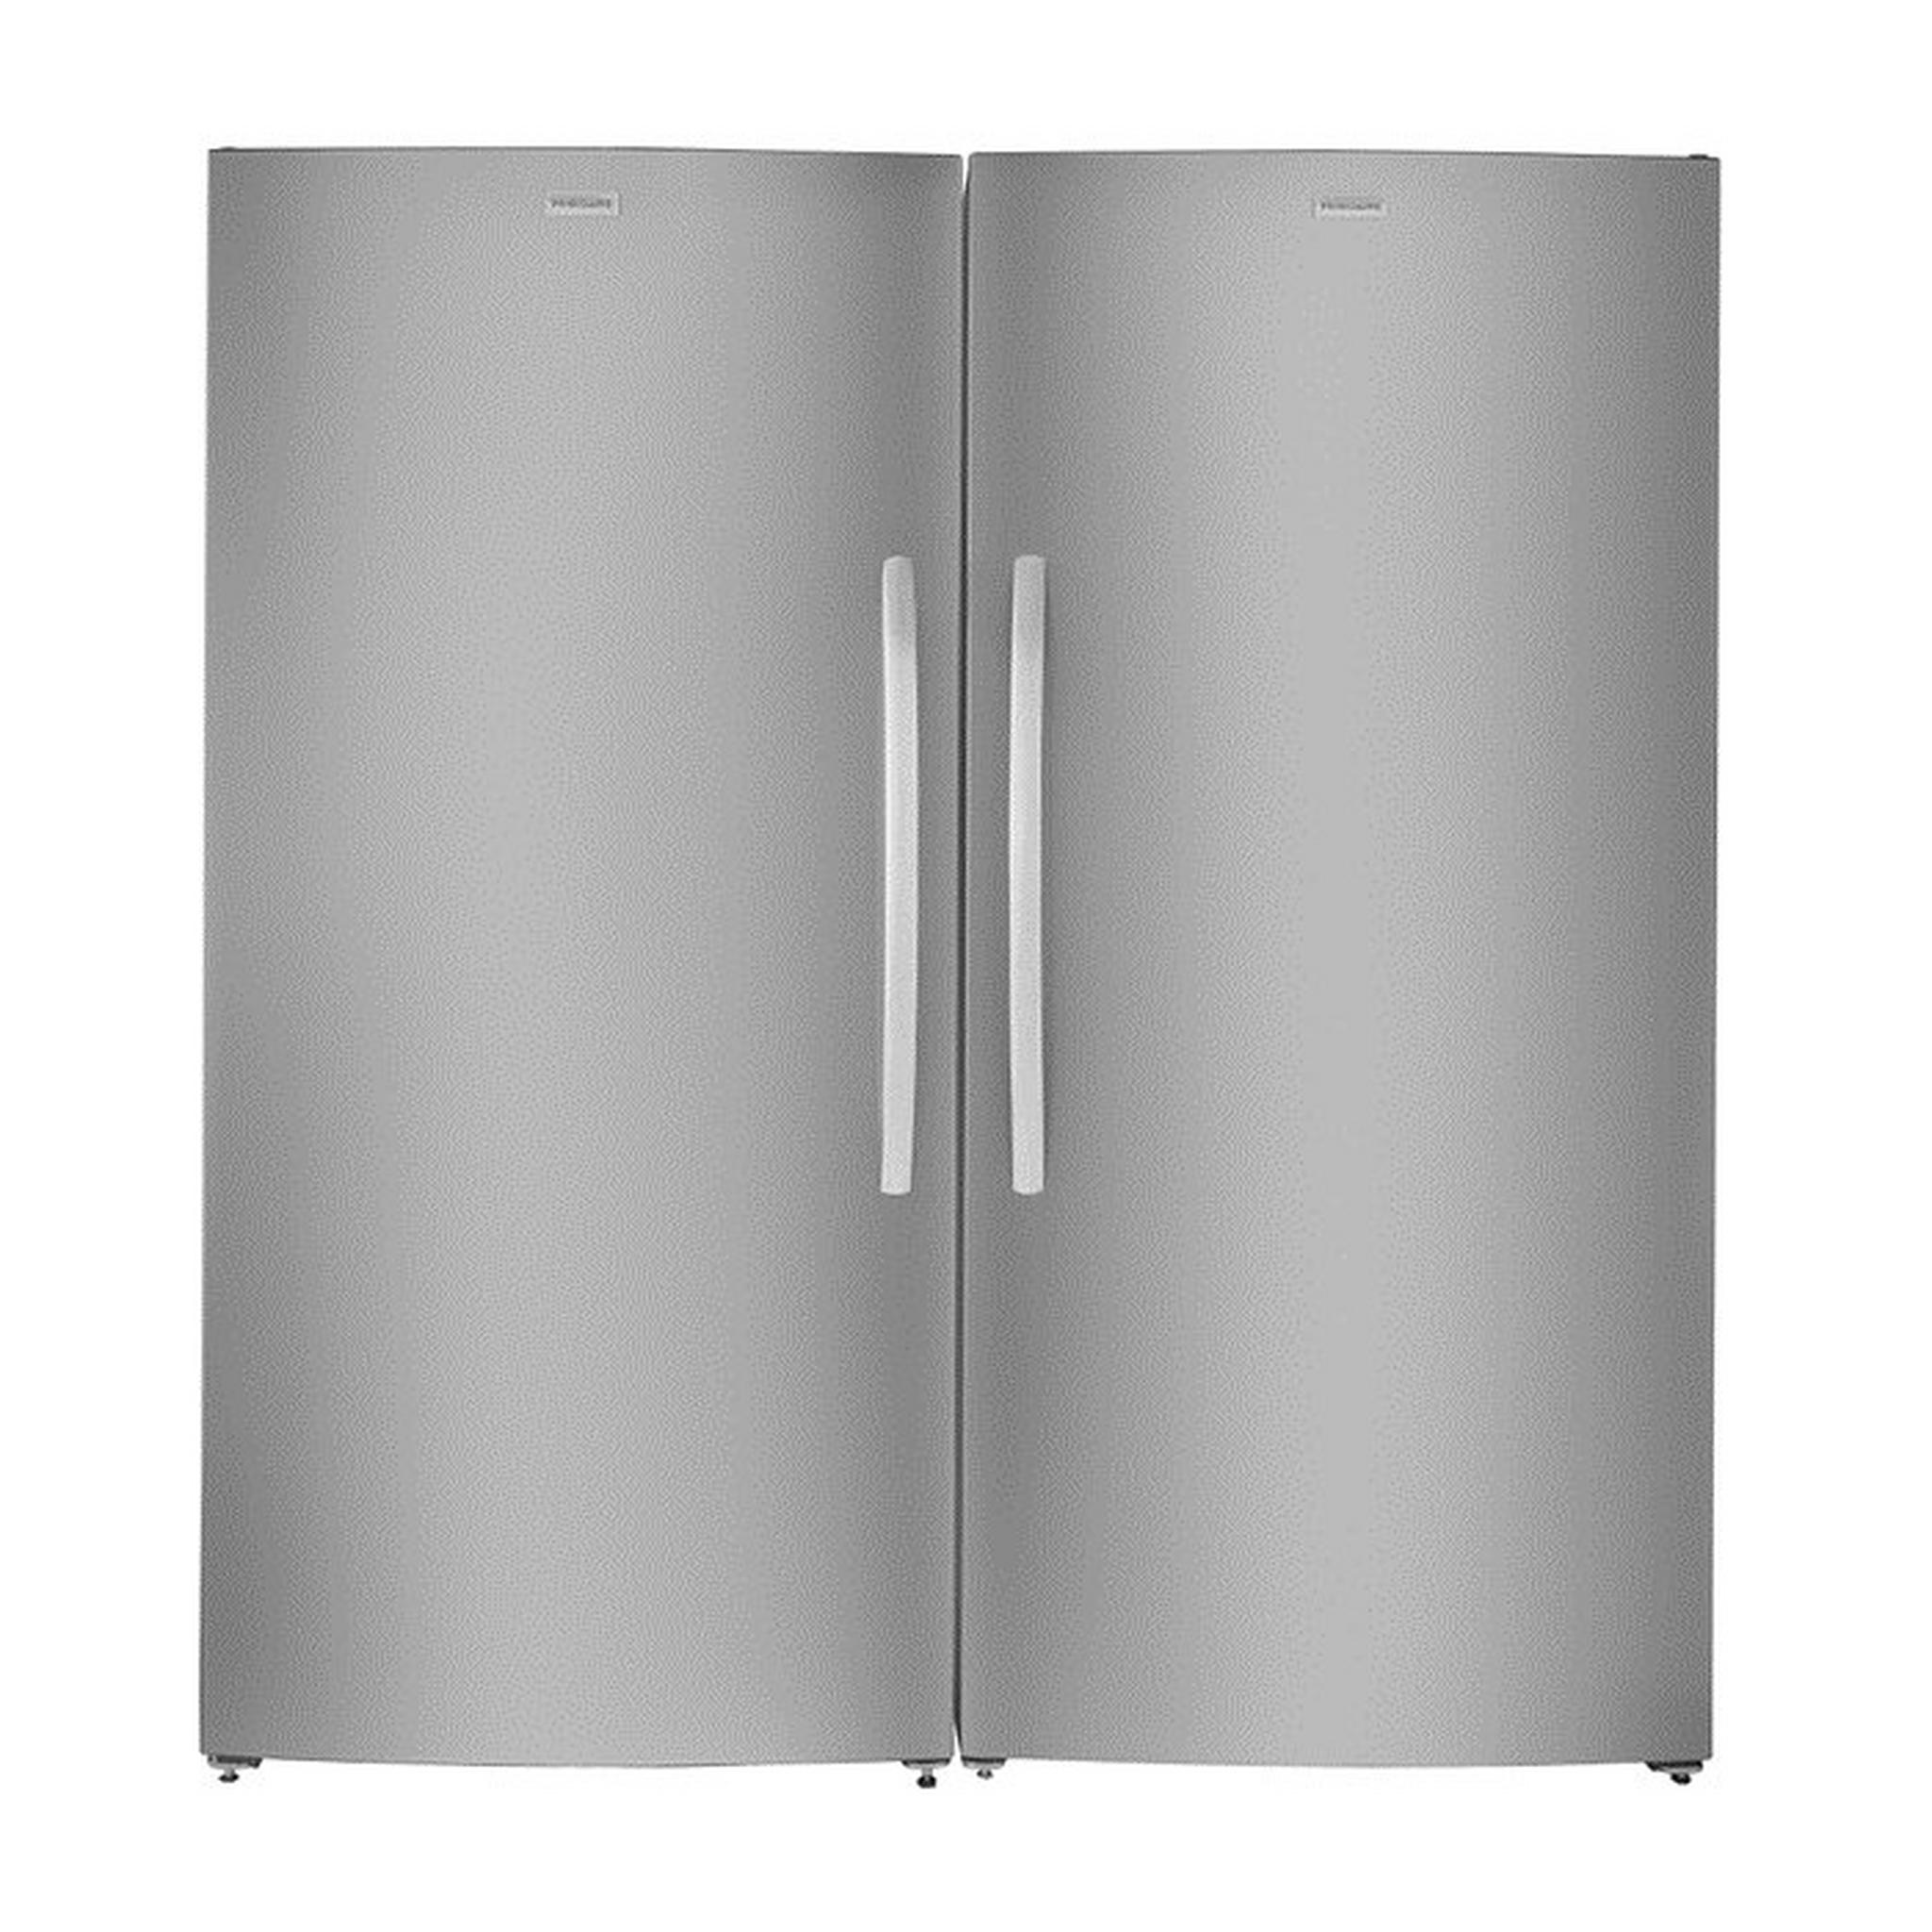 Frigidaire Upright Freezer + Single Door Refrigerator, 20 Cft, 566L, MFUF'22+MRAA22+KIT – Stainless Steel